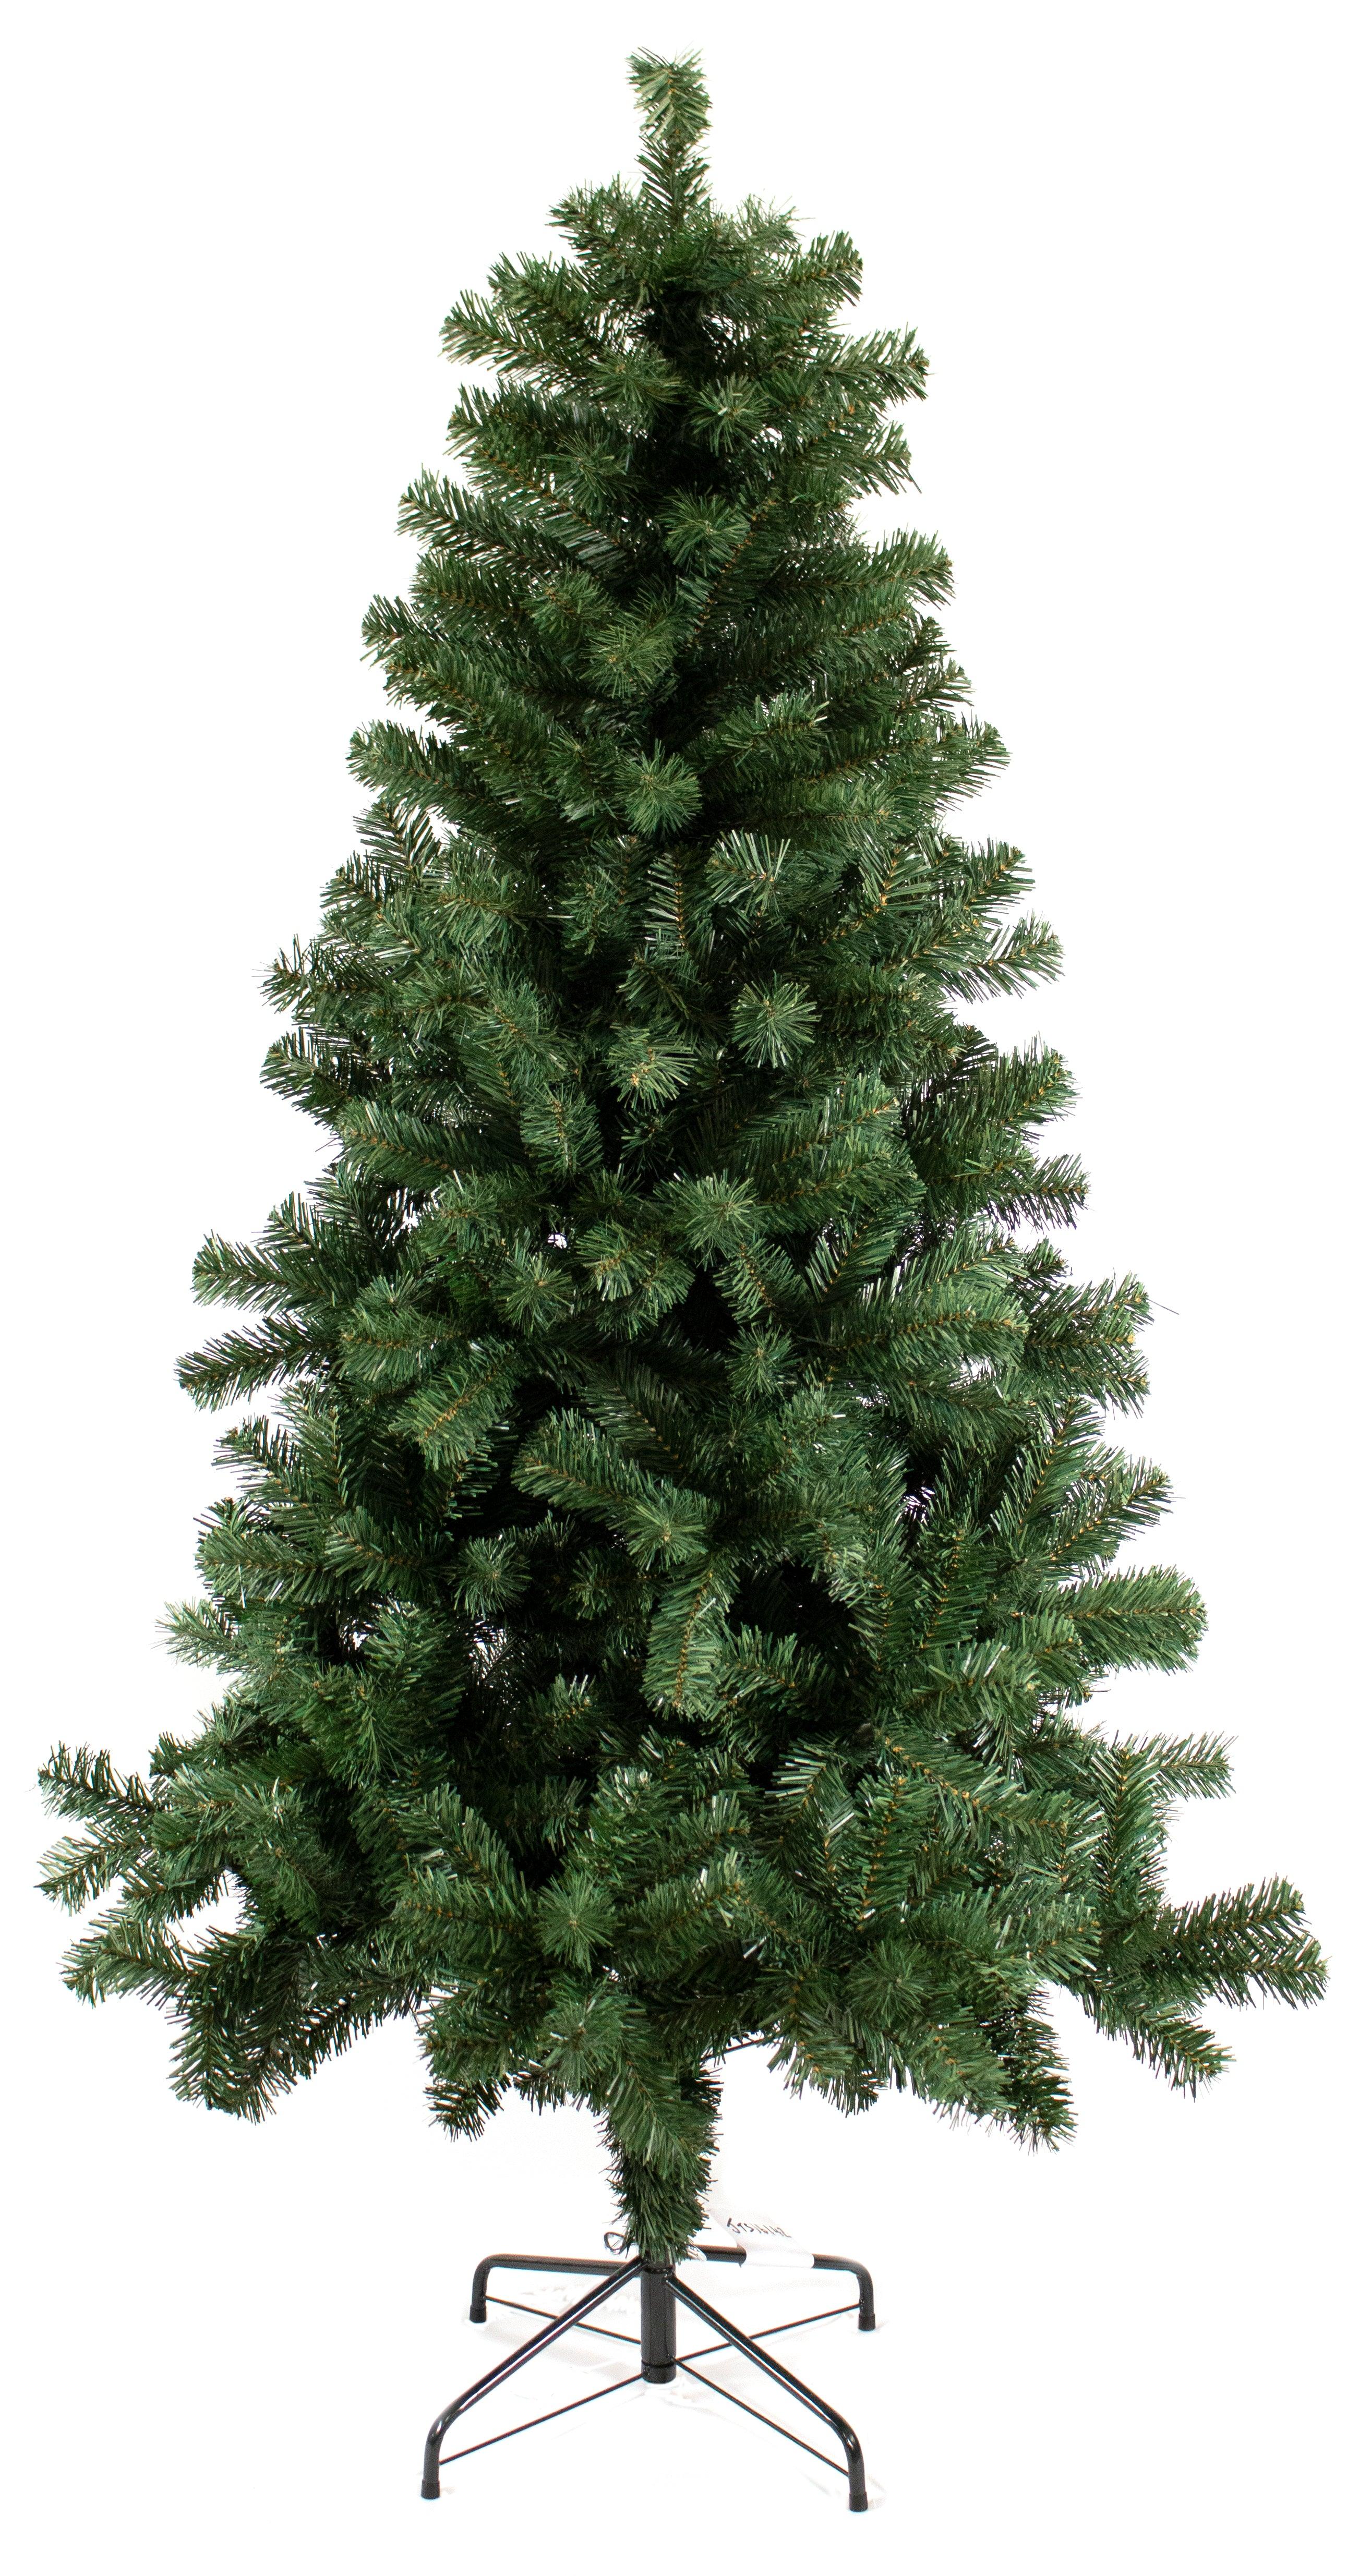 Juniper Green Artificial Christmas Tree 8ft / 240cm - General Hardware Supplies Homevalue